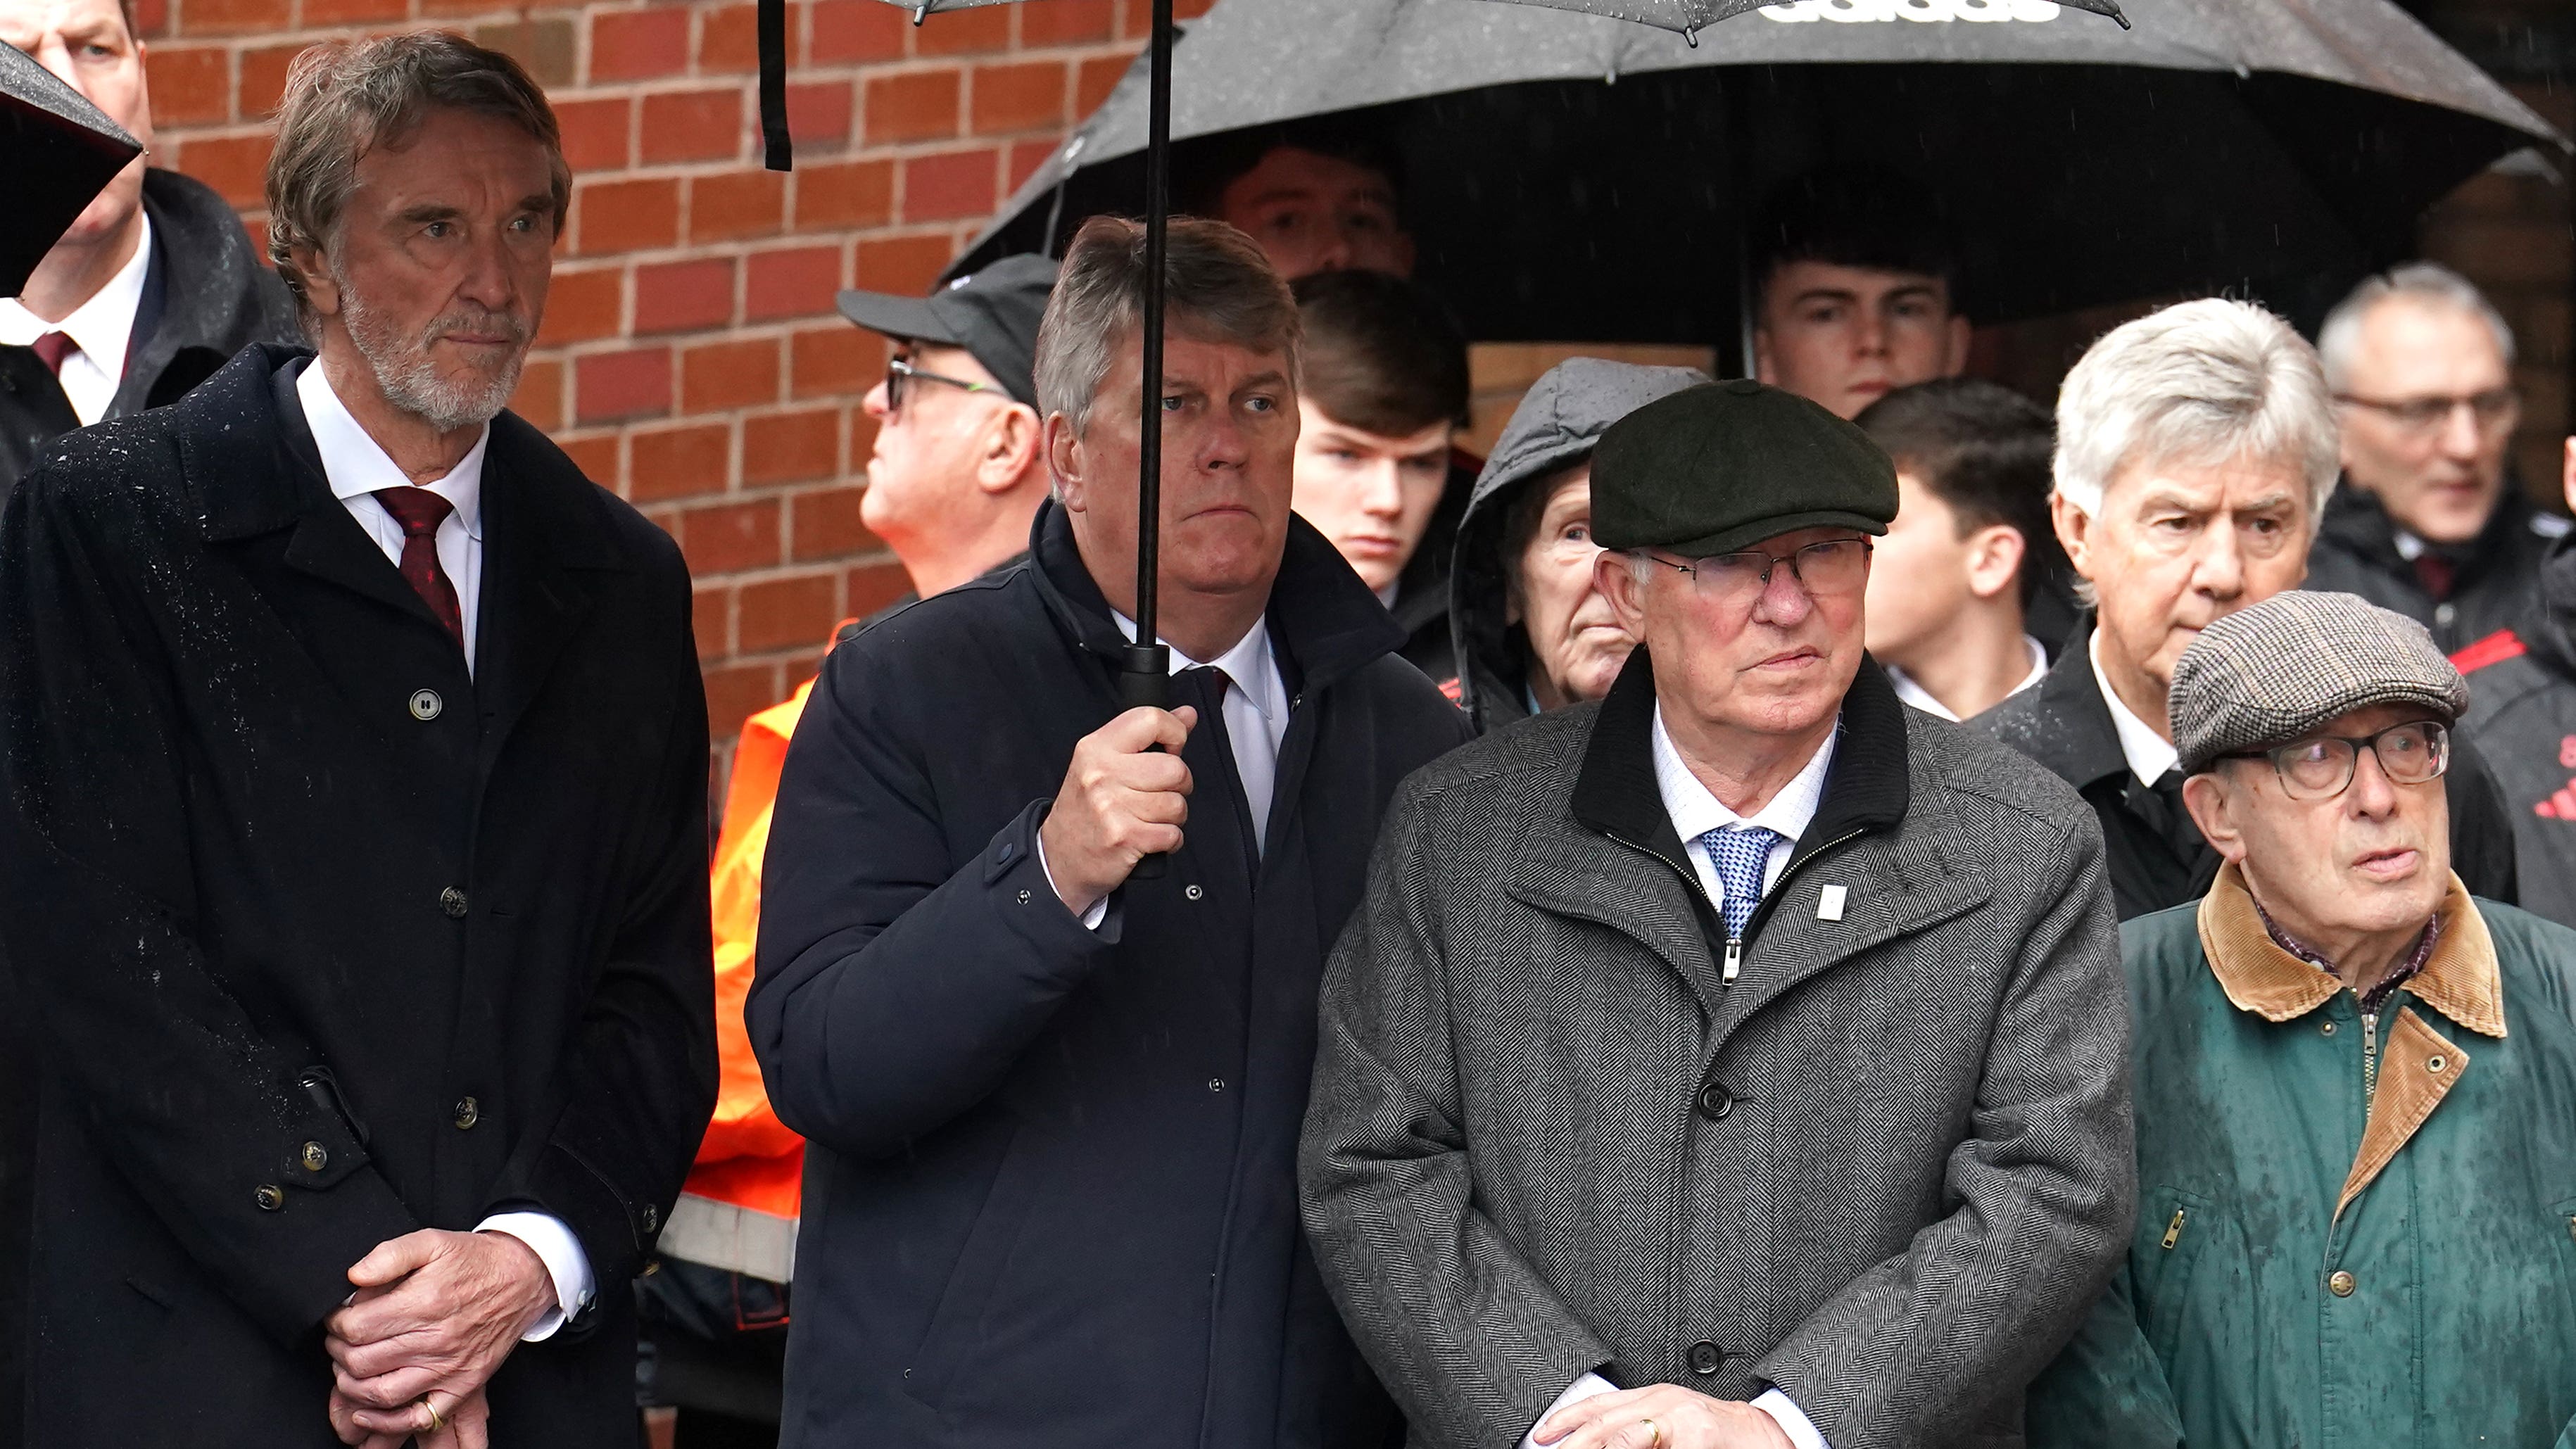 Sir Jim Ratcliffe joins Man Utd greats for Munich Air Disaster memorial service